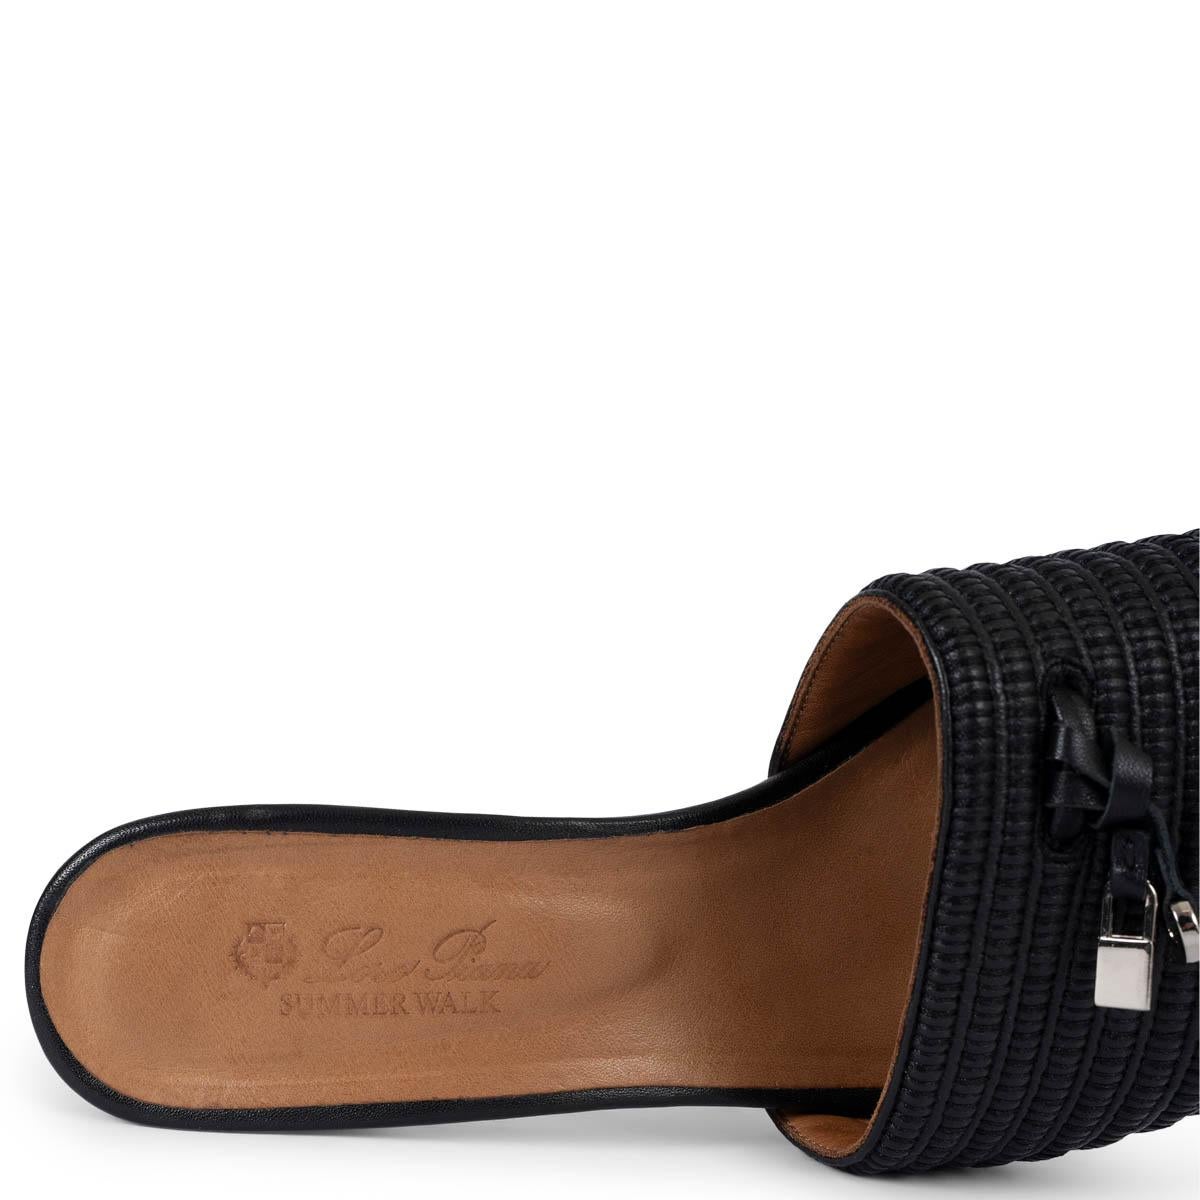 LORO PIANA black leather & raffia SUMMER WALK Mule Sandals Shoes 41 fit 40 For Sale 3